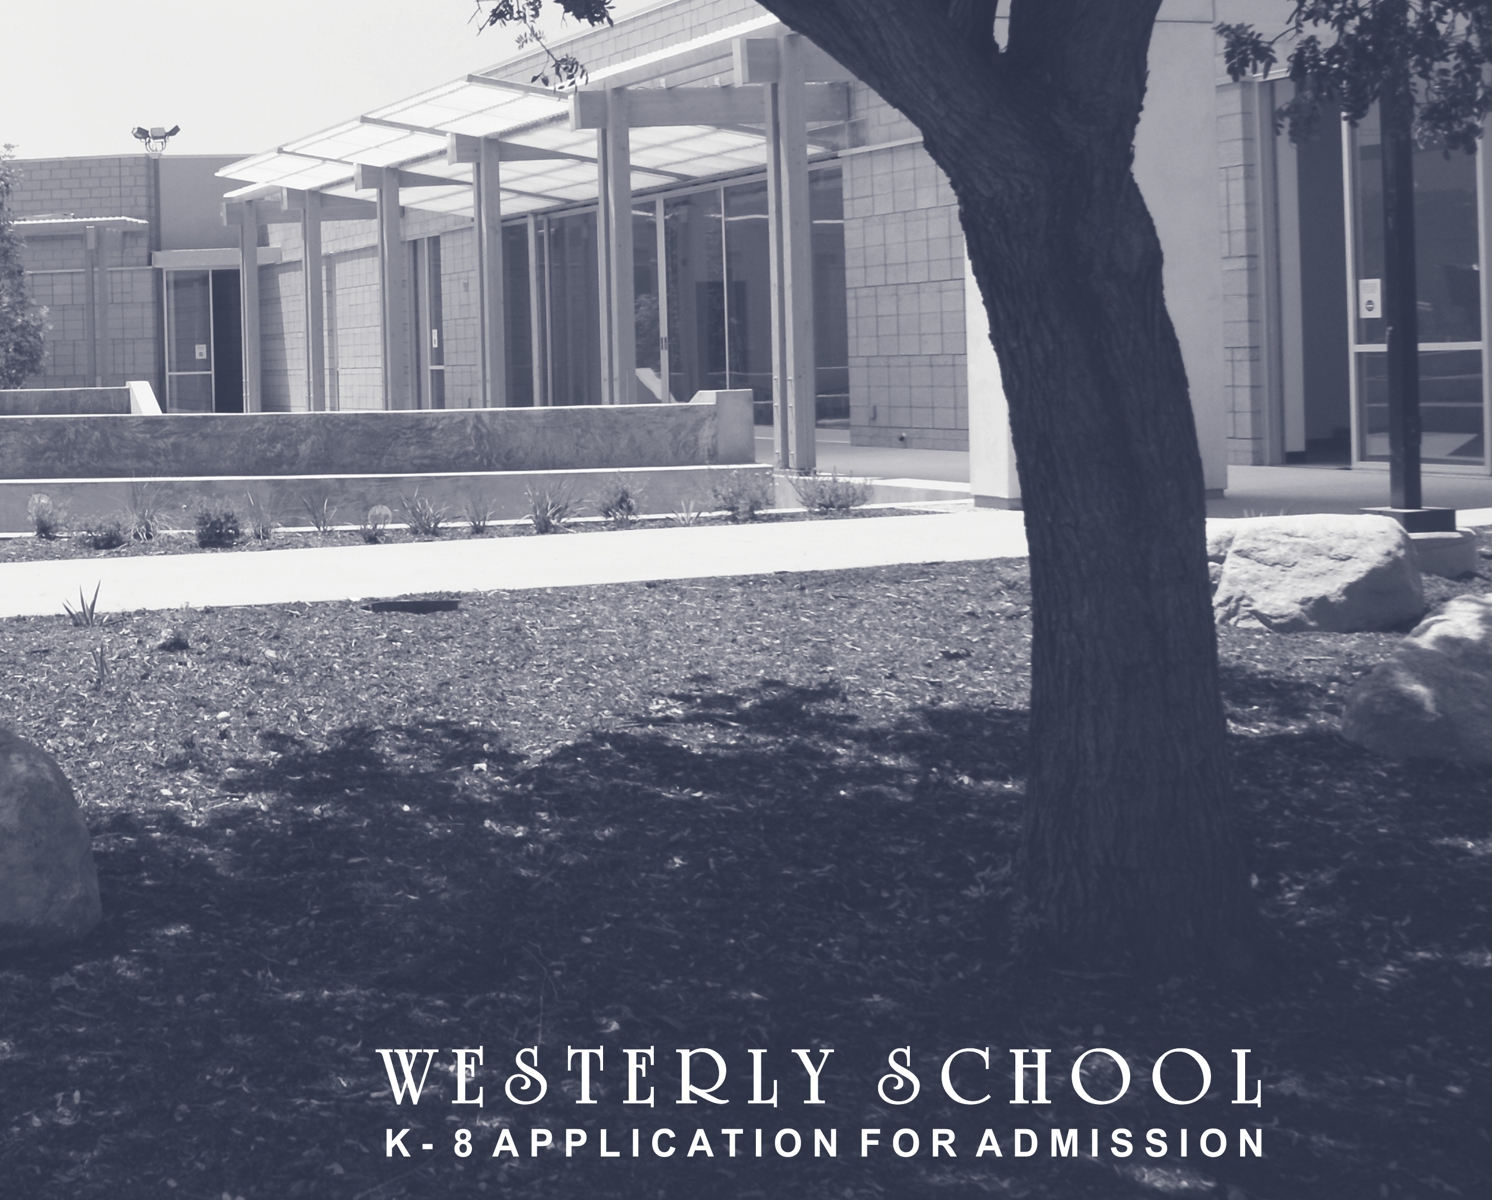 WESTERLY SCHOOL OF LONG BEACH